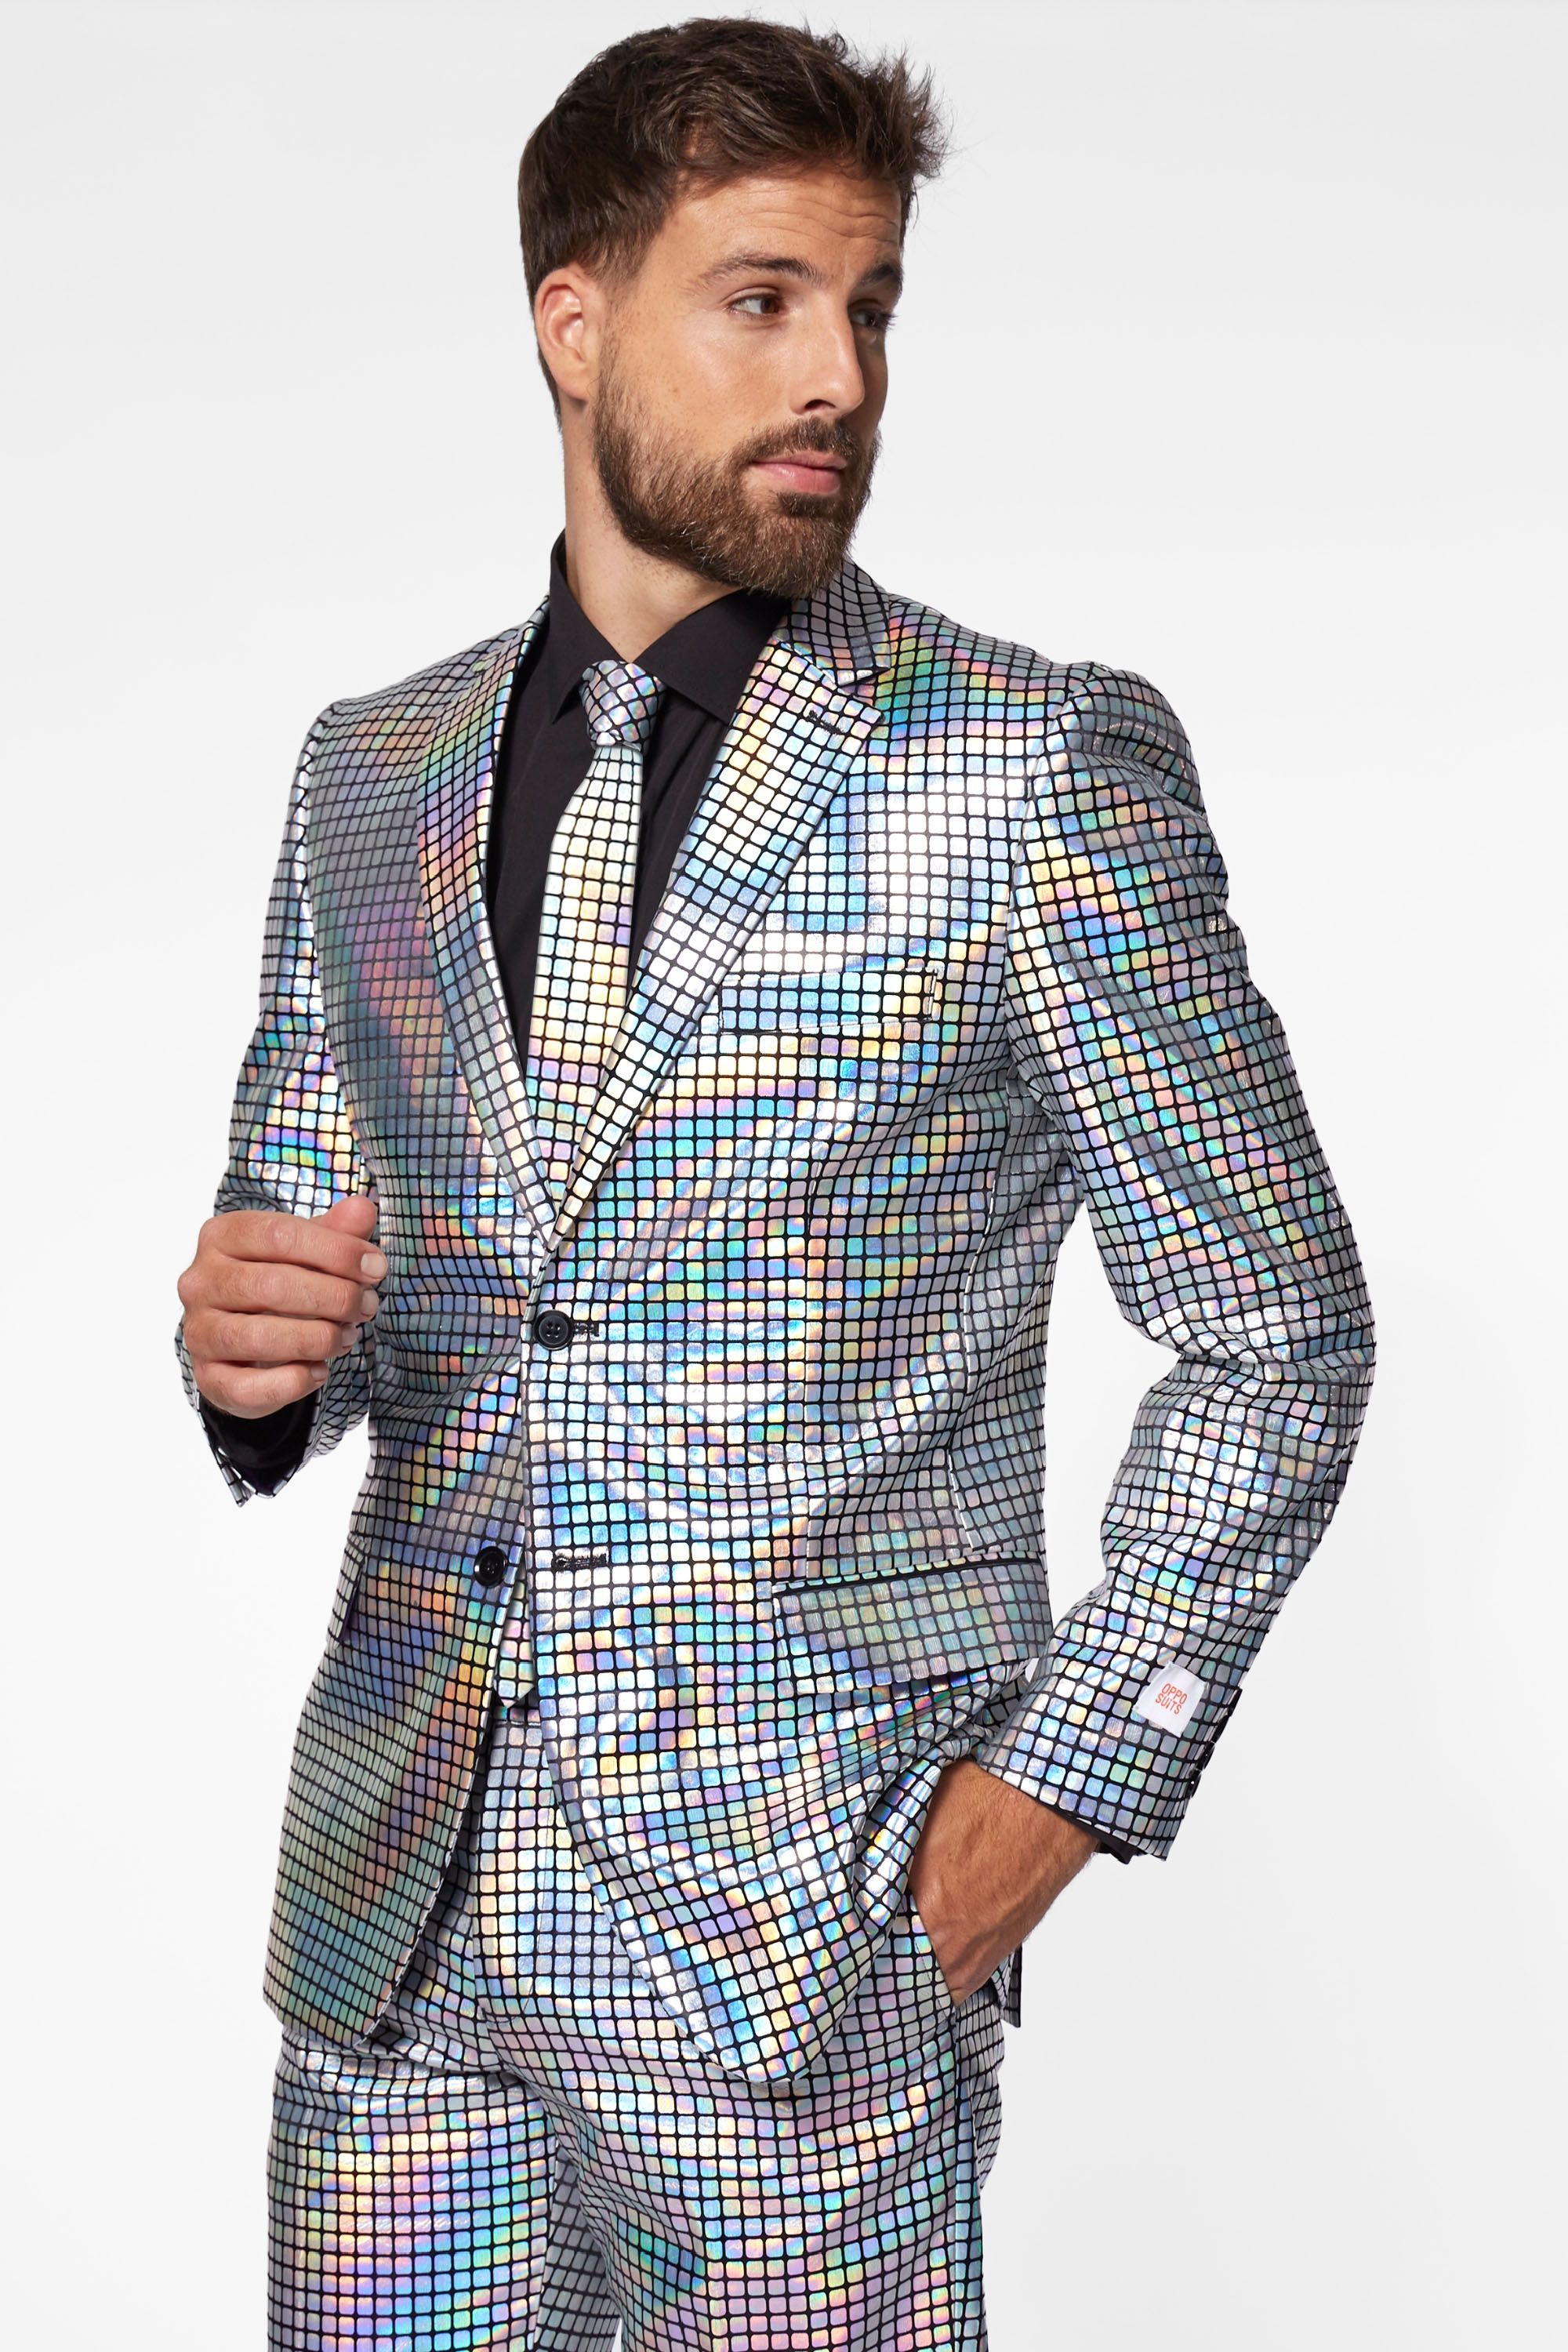 OppoSuits Discoballer Suit Multicolour Silver size 36-R